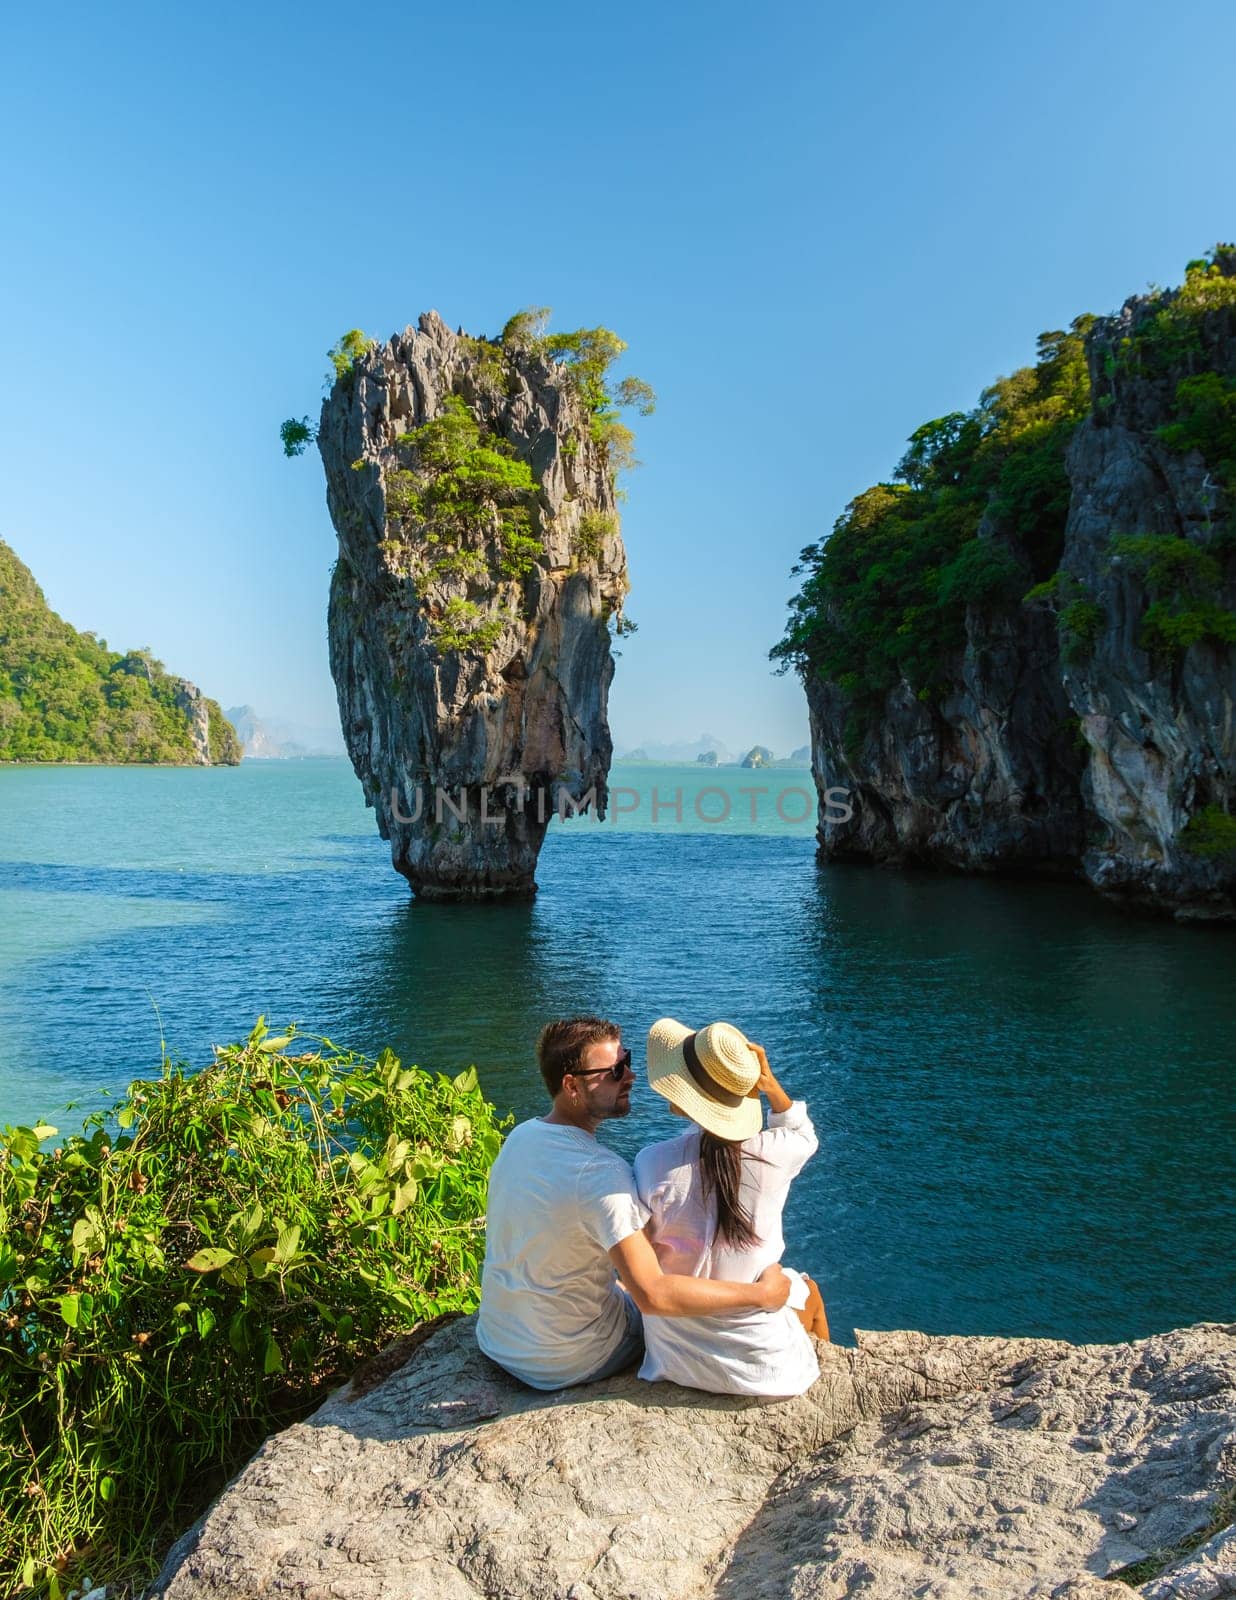 James Bond Island Phangnga Bay Thailand, couple visit the Island near Phuket Thailand by fokkebok